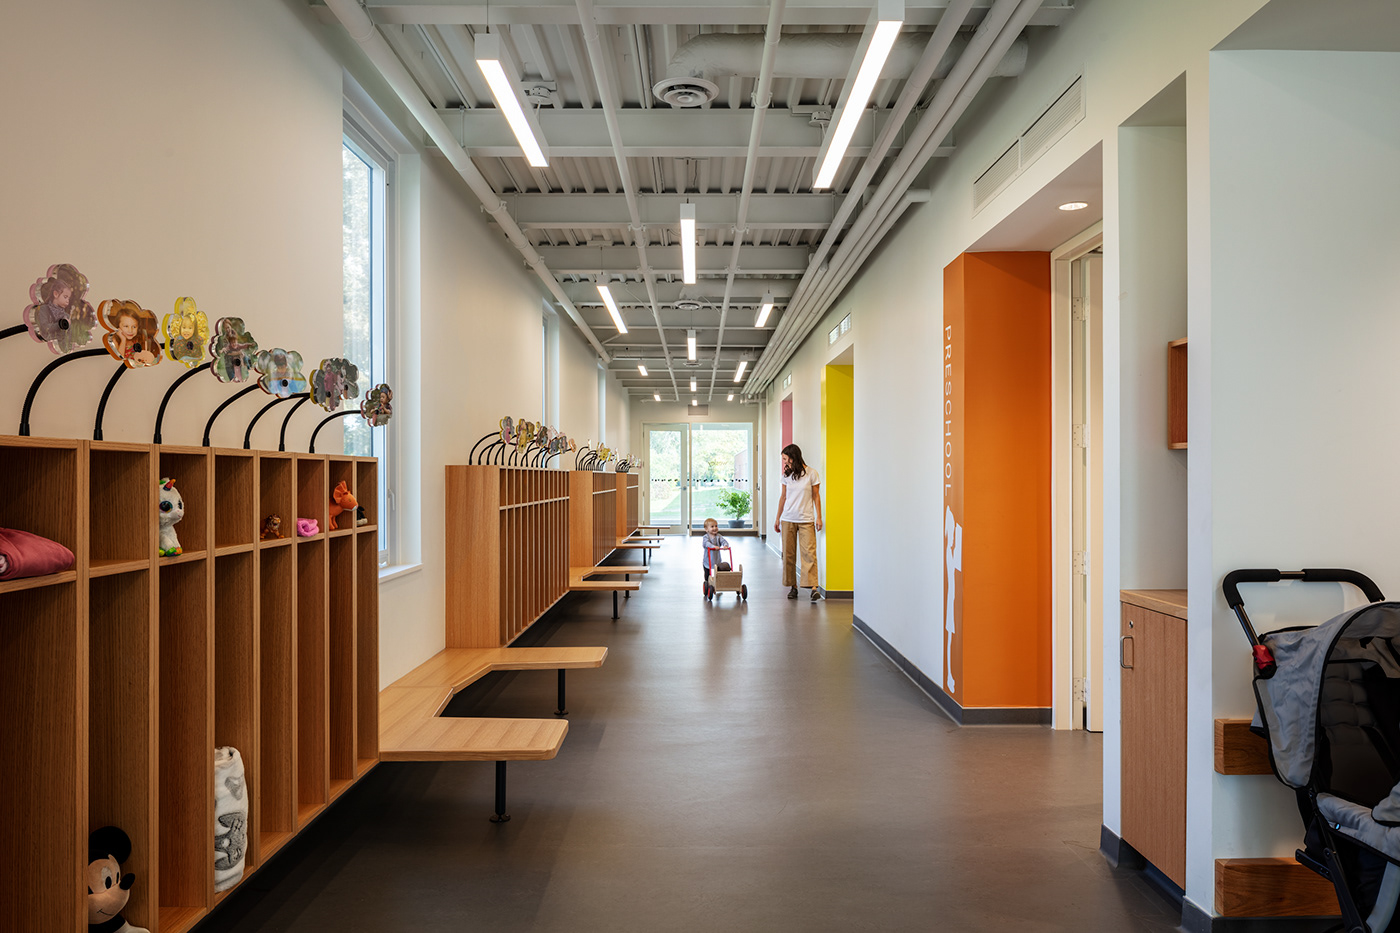 architecture child care institutional Hamilton Ontario Canada daycare contemporary modern addition